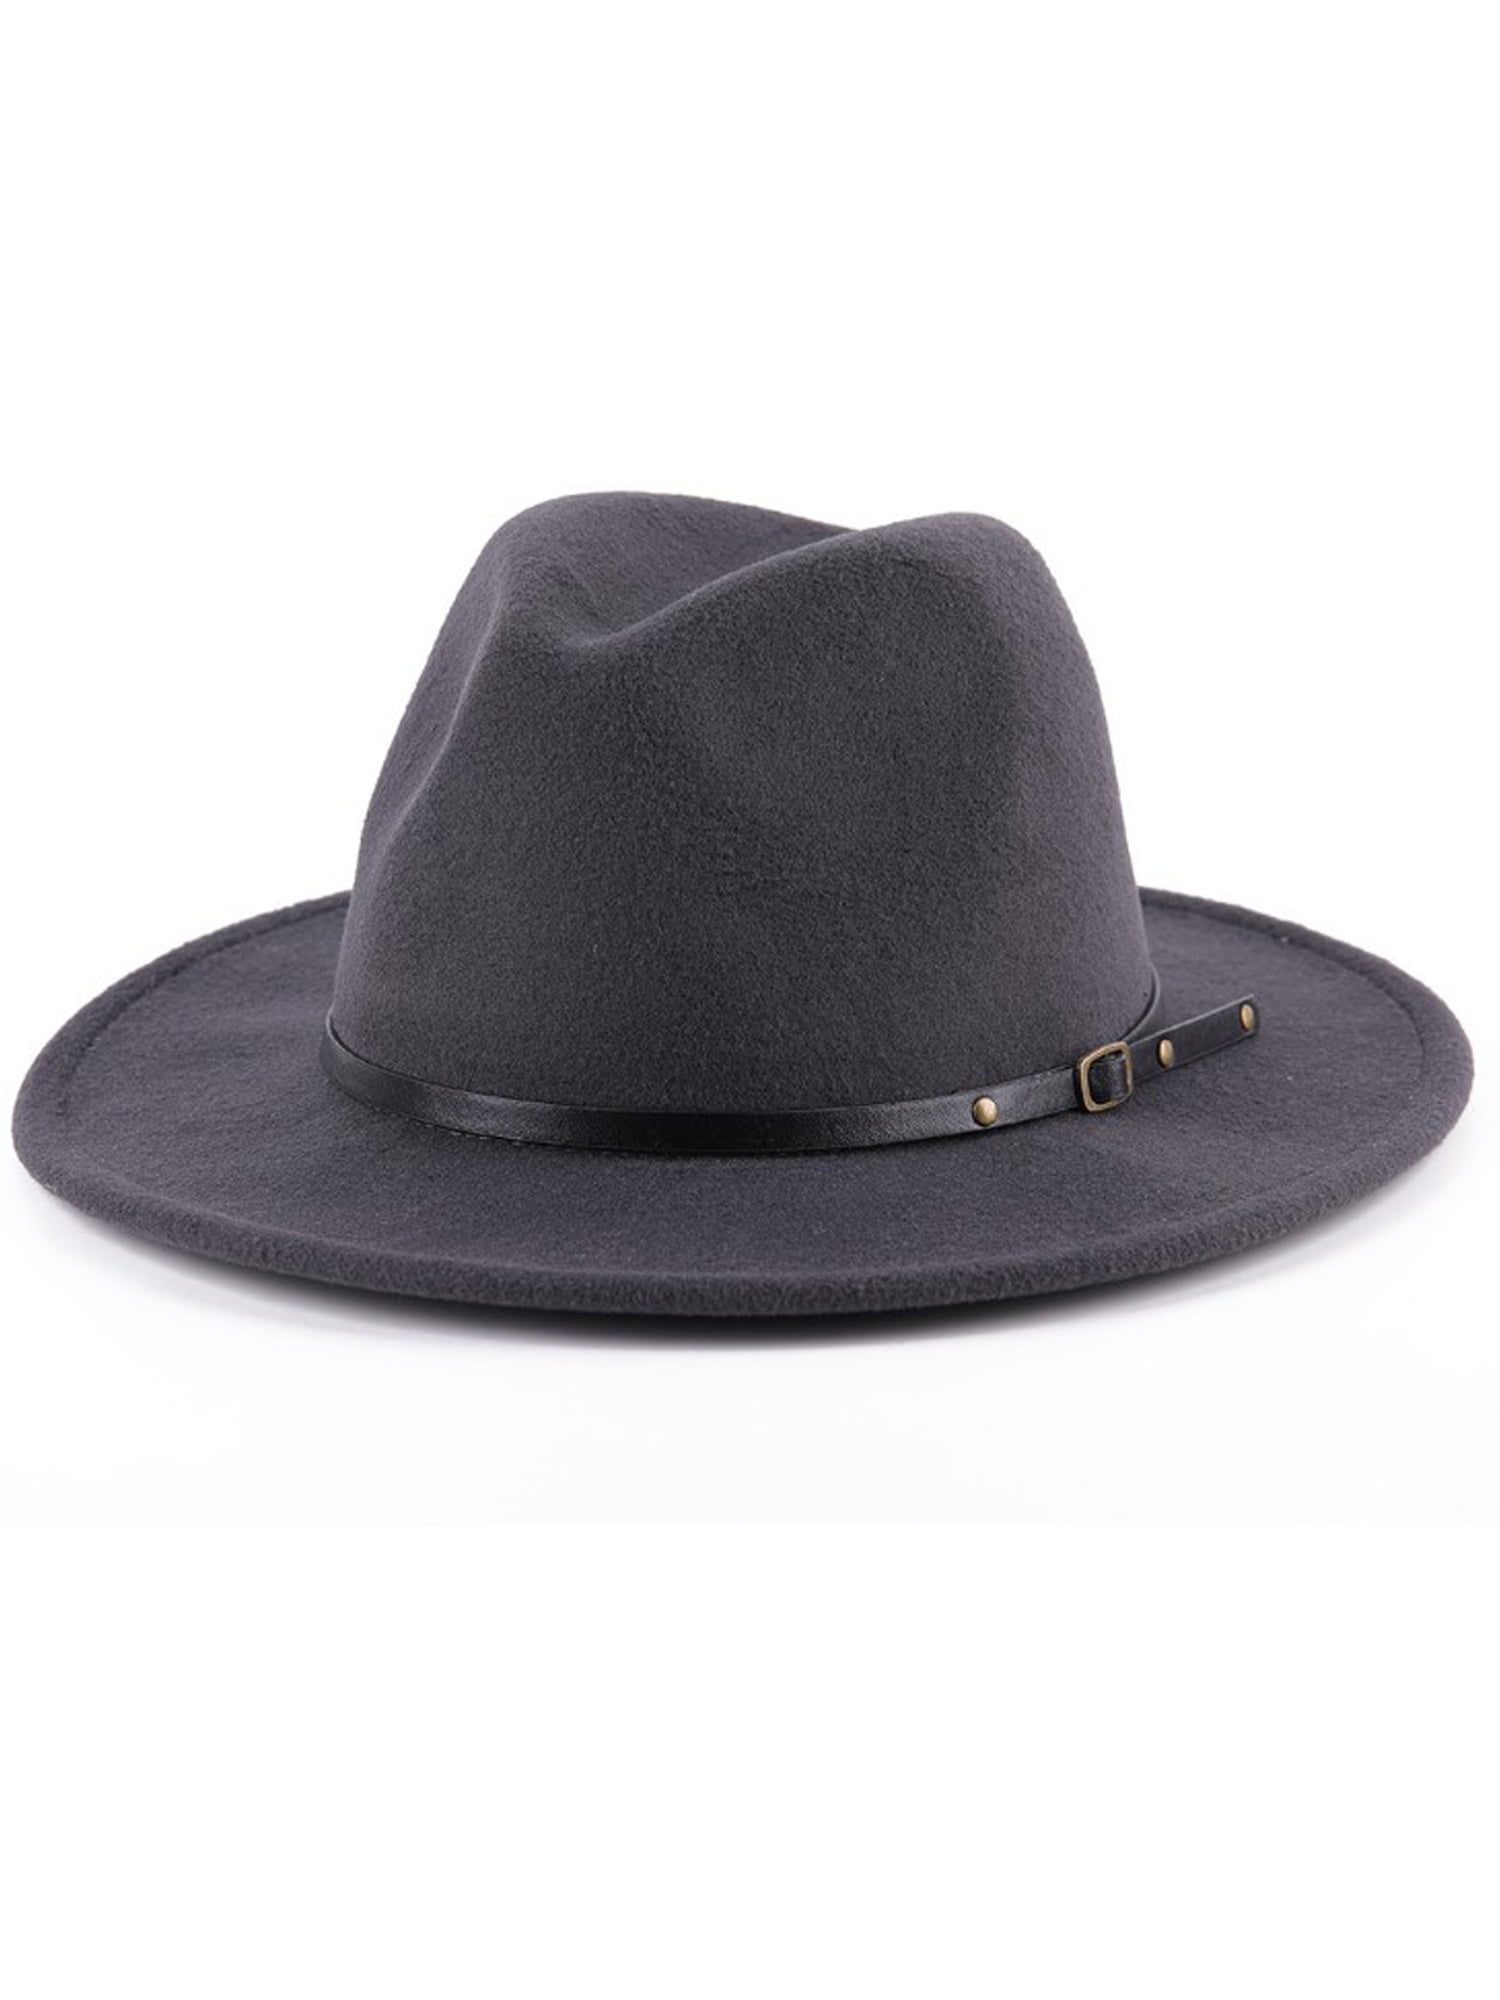 Men Bowler Derby Cowboy Gangster Cap Fedora Trilby Felt Jazz Hat Formal Cap 